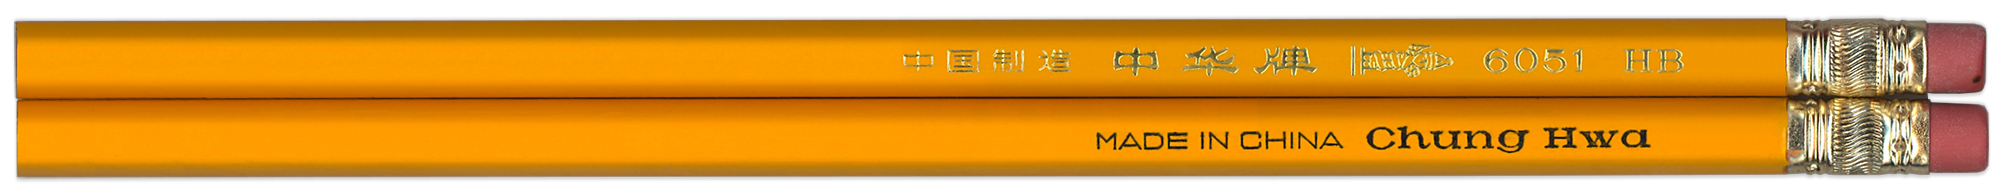 chung_hwa_6051_yellow